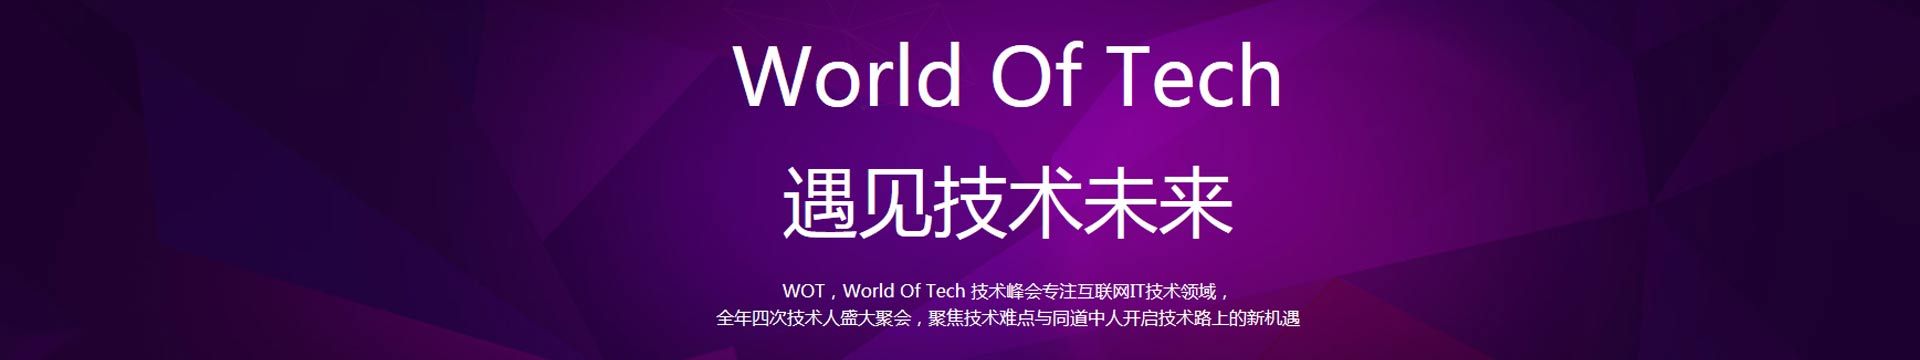 World Of Tech 2016  大数据技术峰会